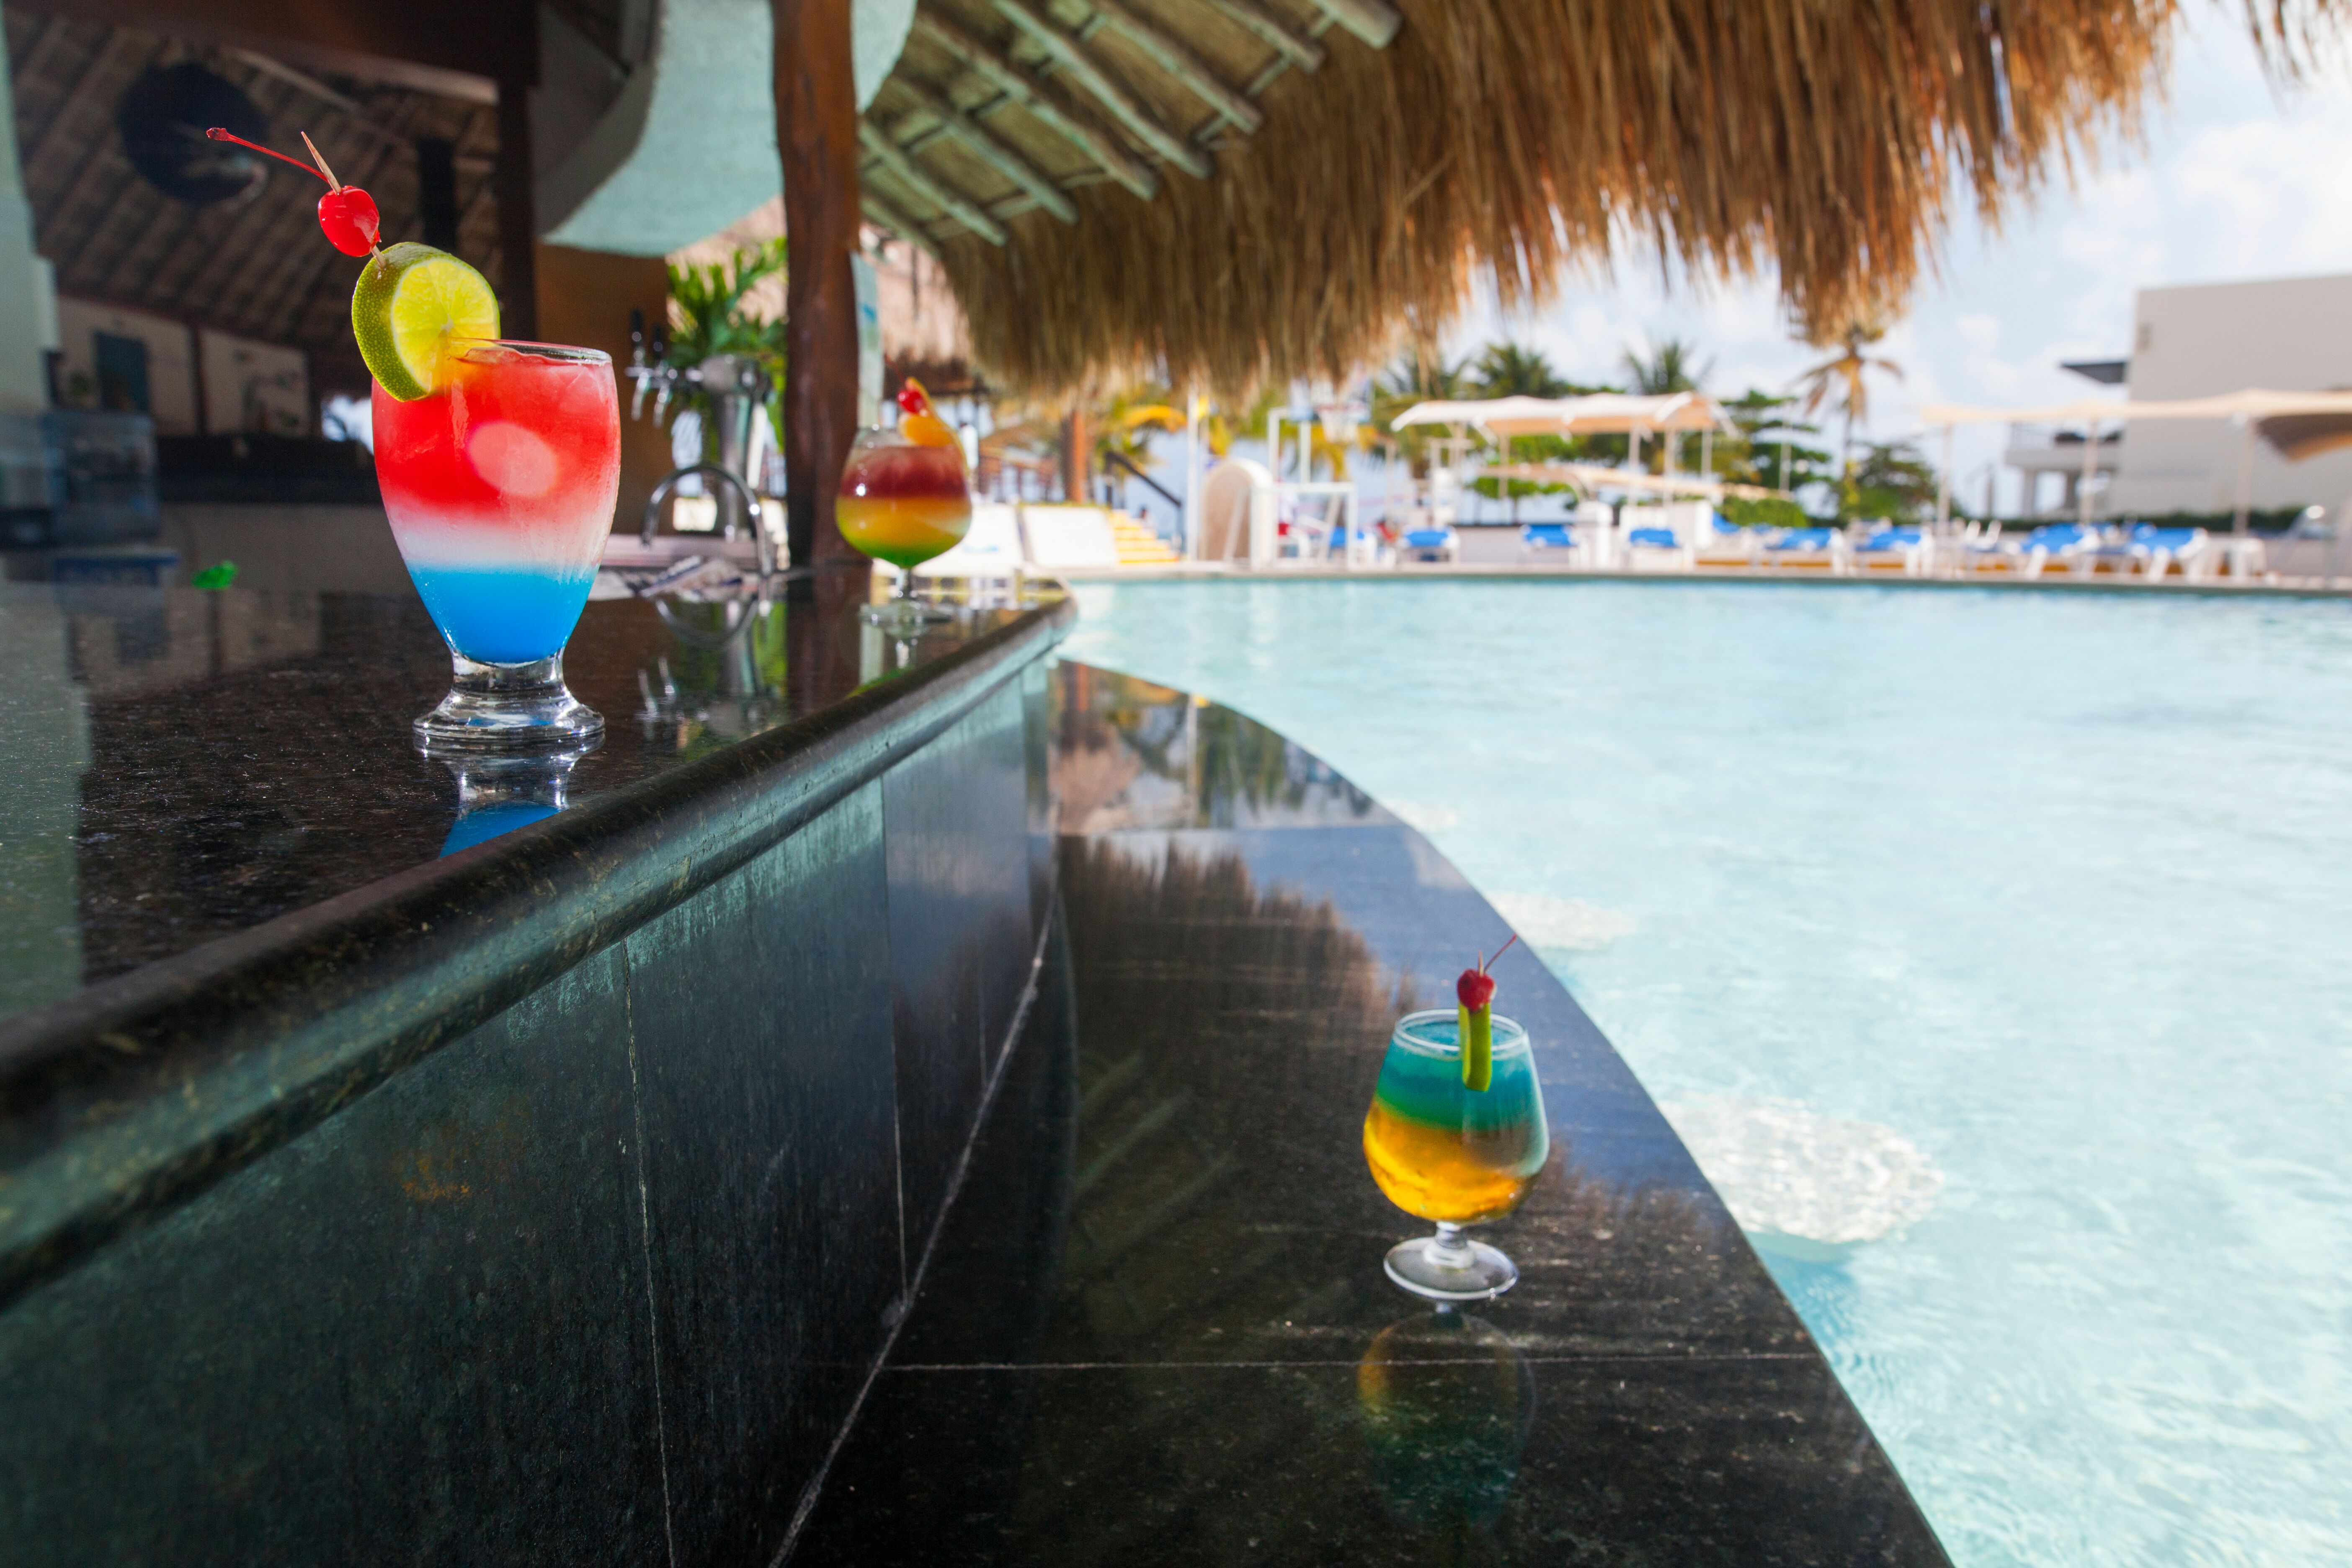 Hotel Aquamarina Beach Hotel Cancun Mexico